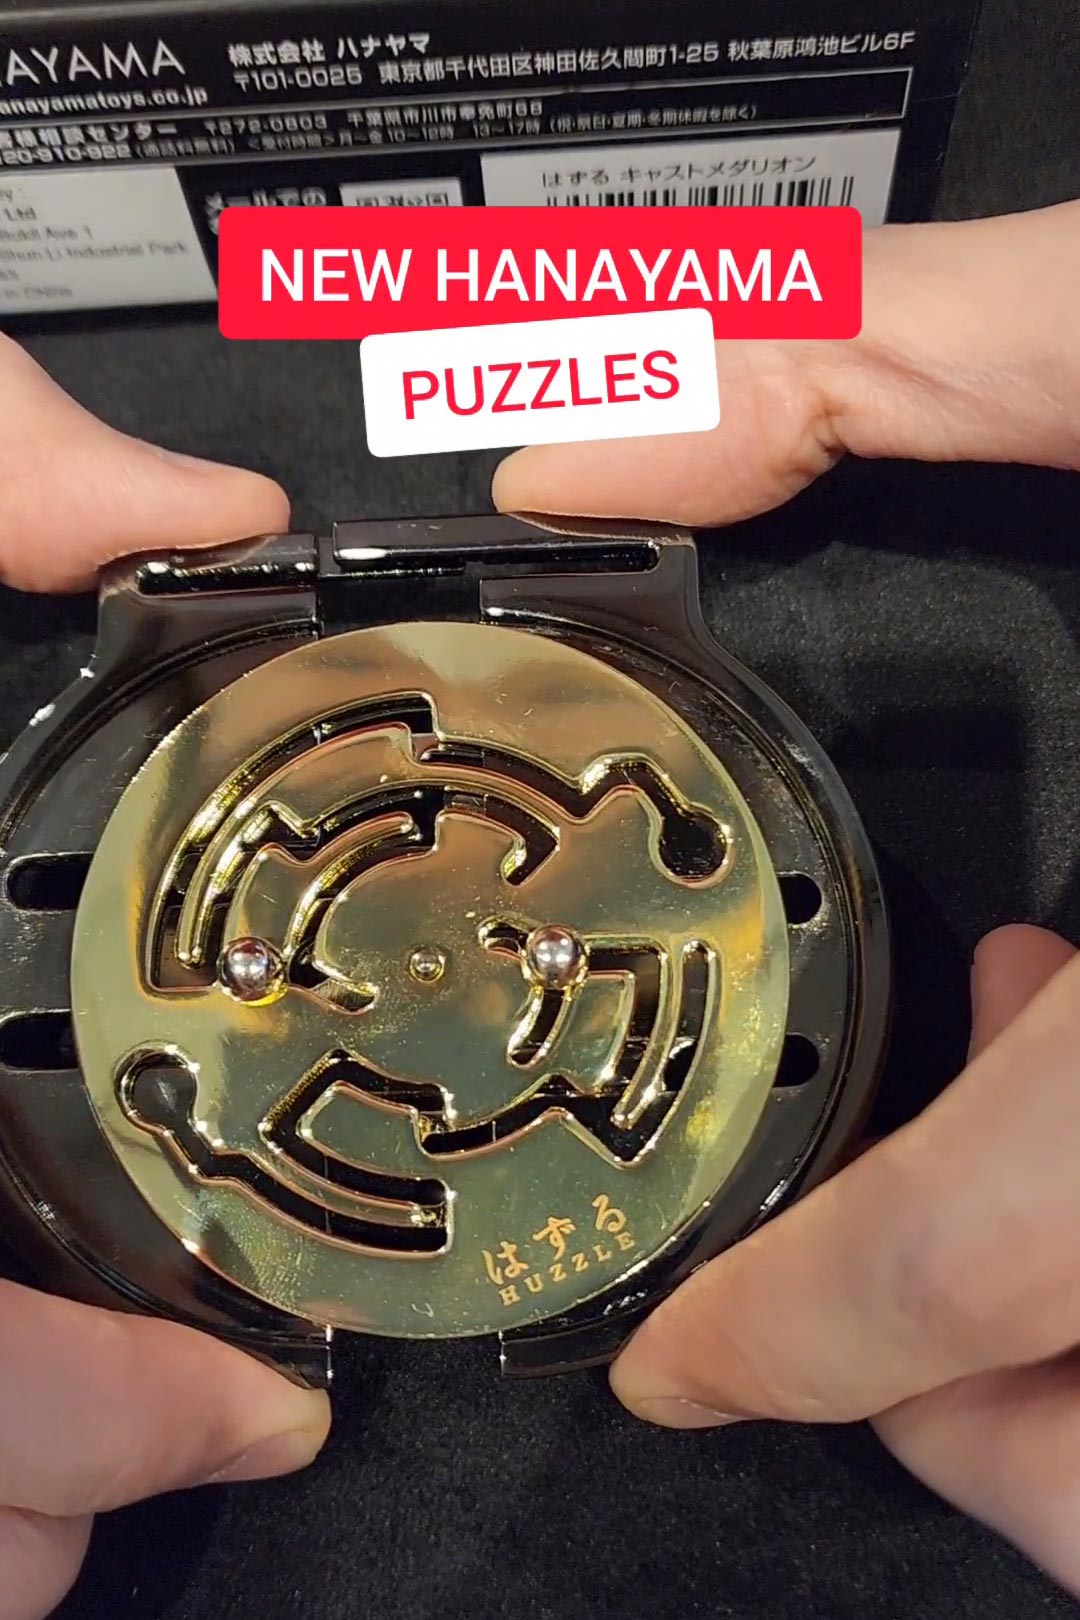 New Hanayama Puzzles!